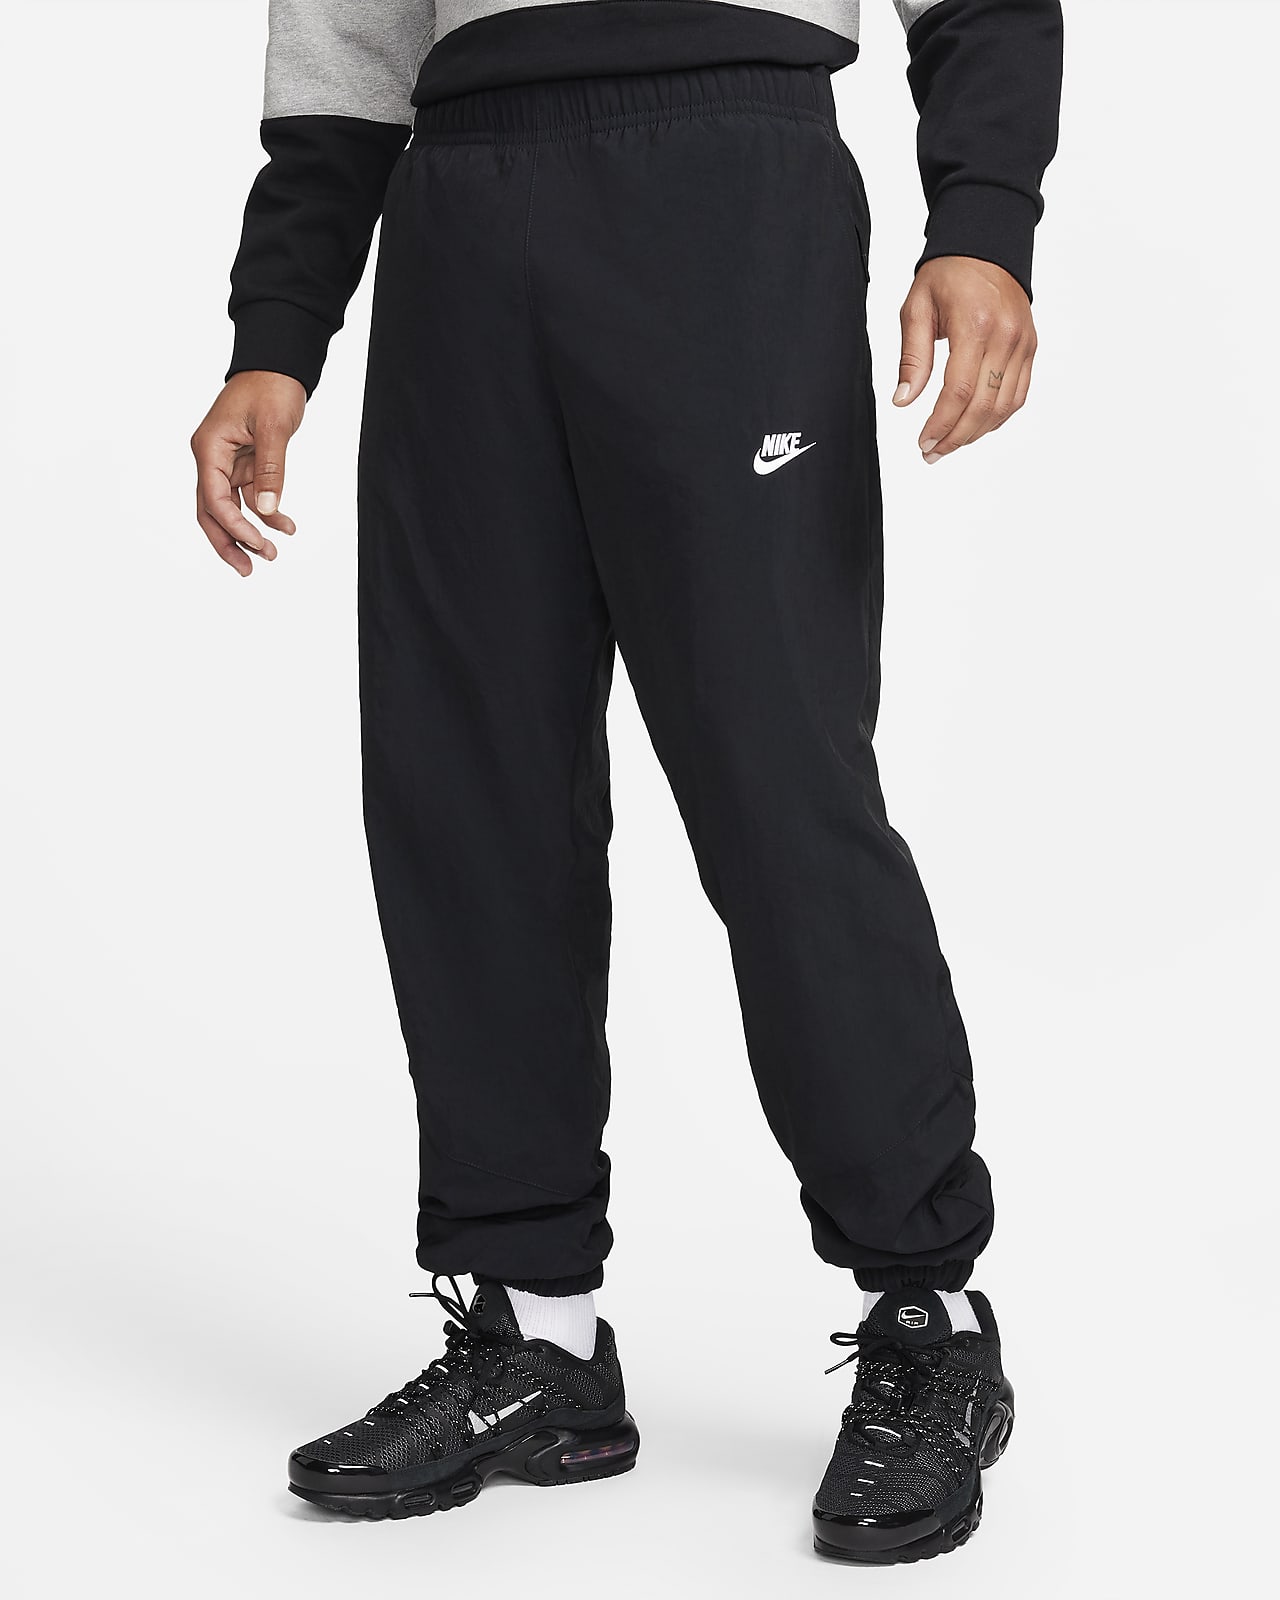 Pantaloni in tessuto per l'inverno Nike Windrunner – Uomo